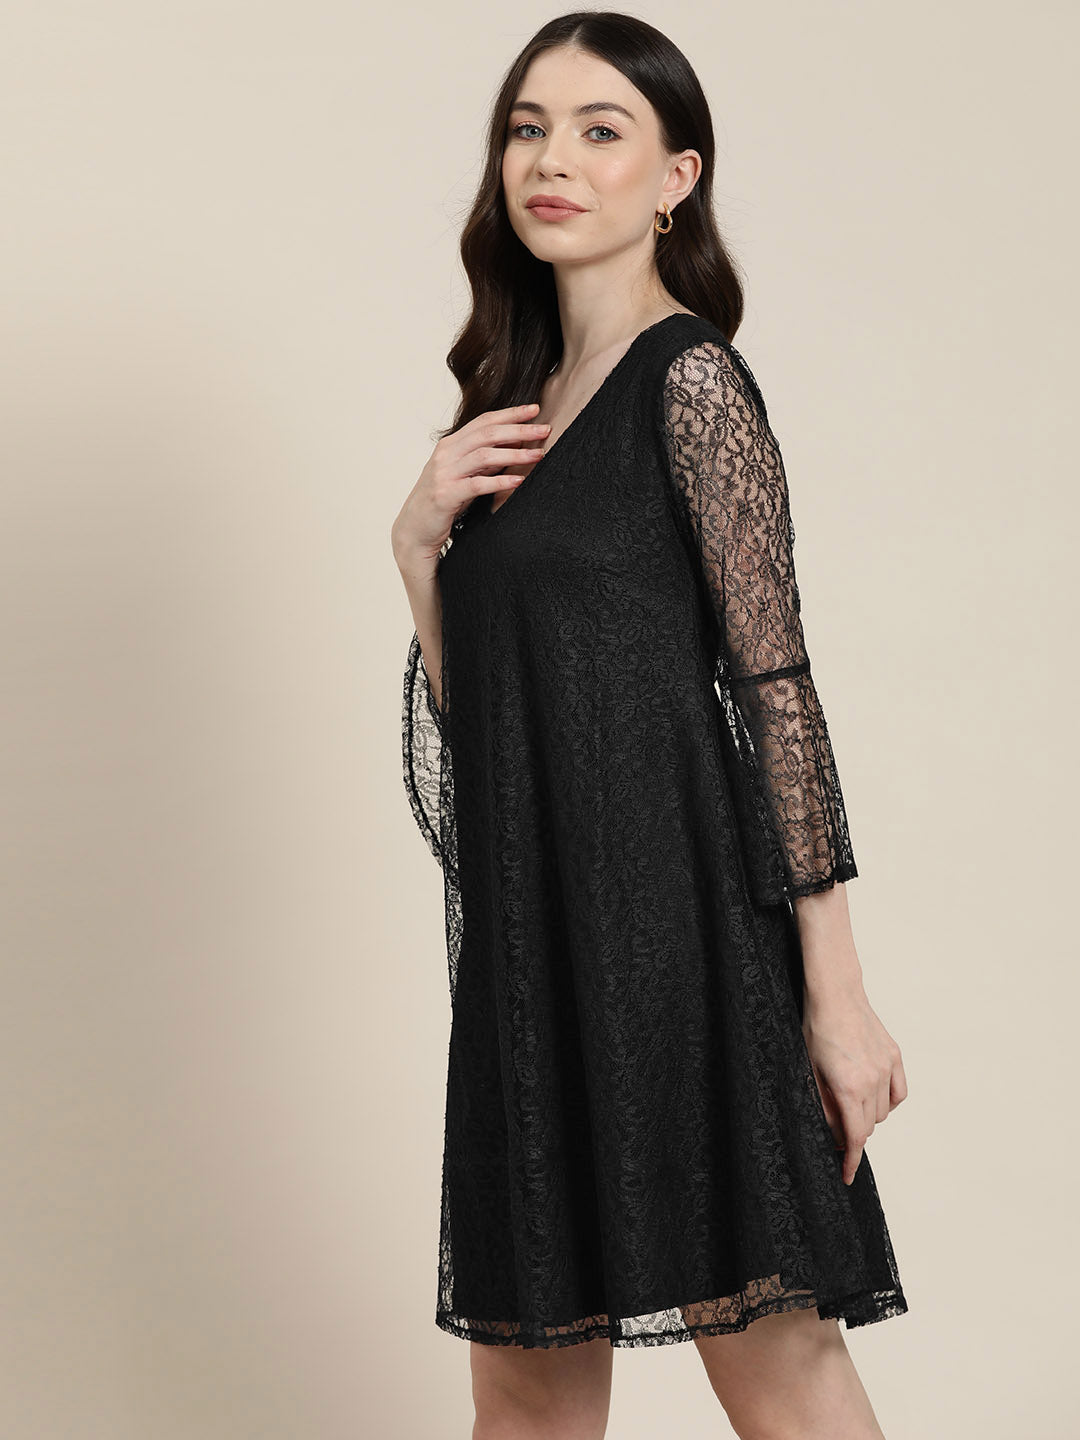 Black floral net dress